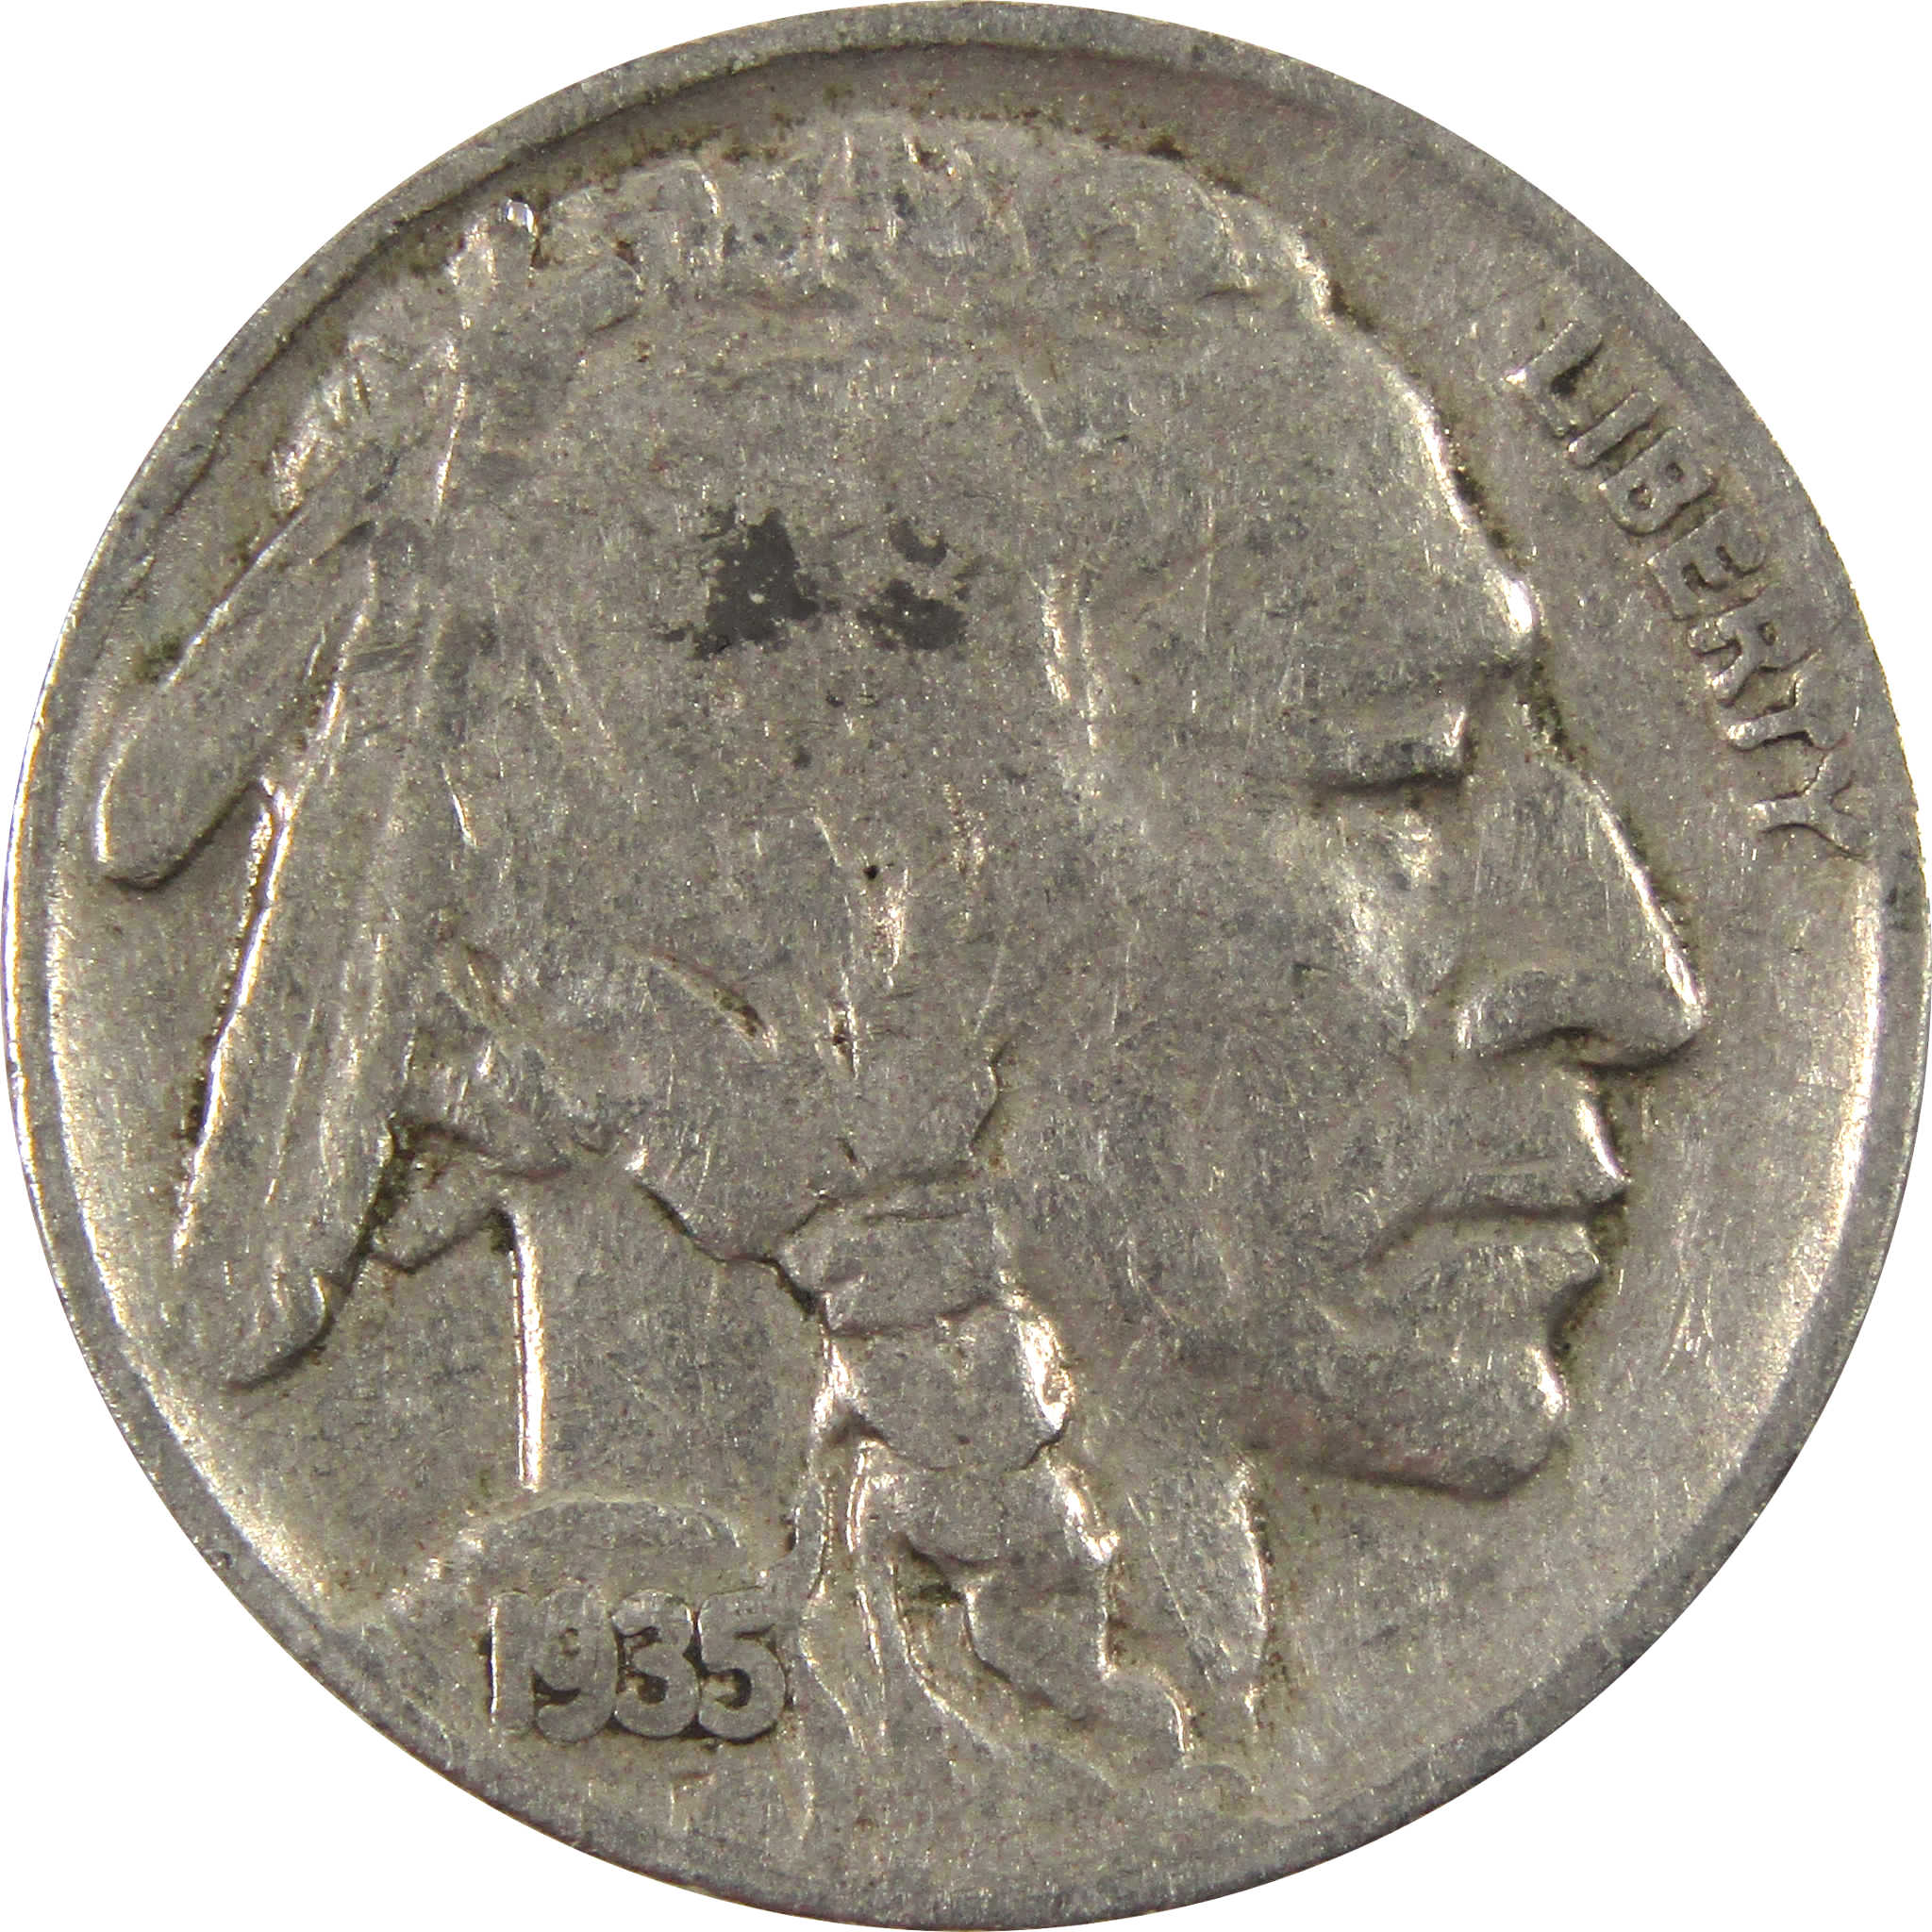 1935 Indian Head Buffalo Nickel AG About Good 5c Coin